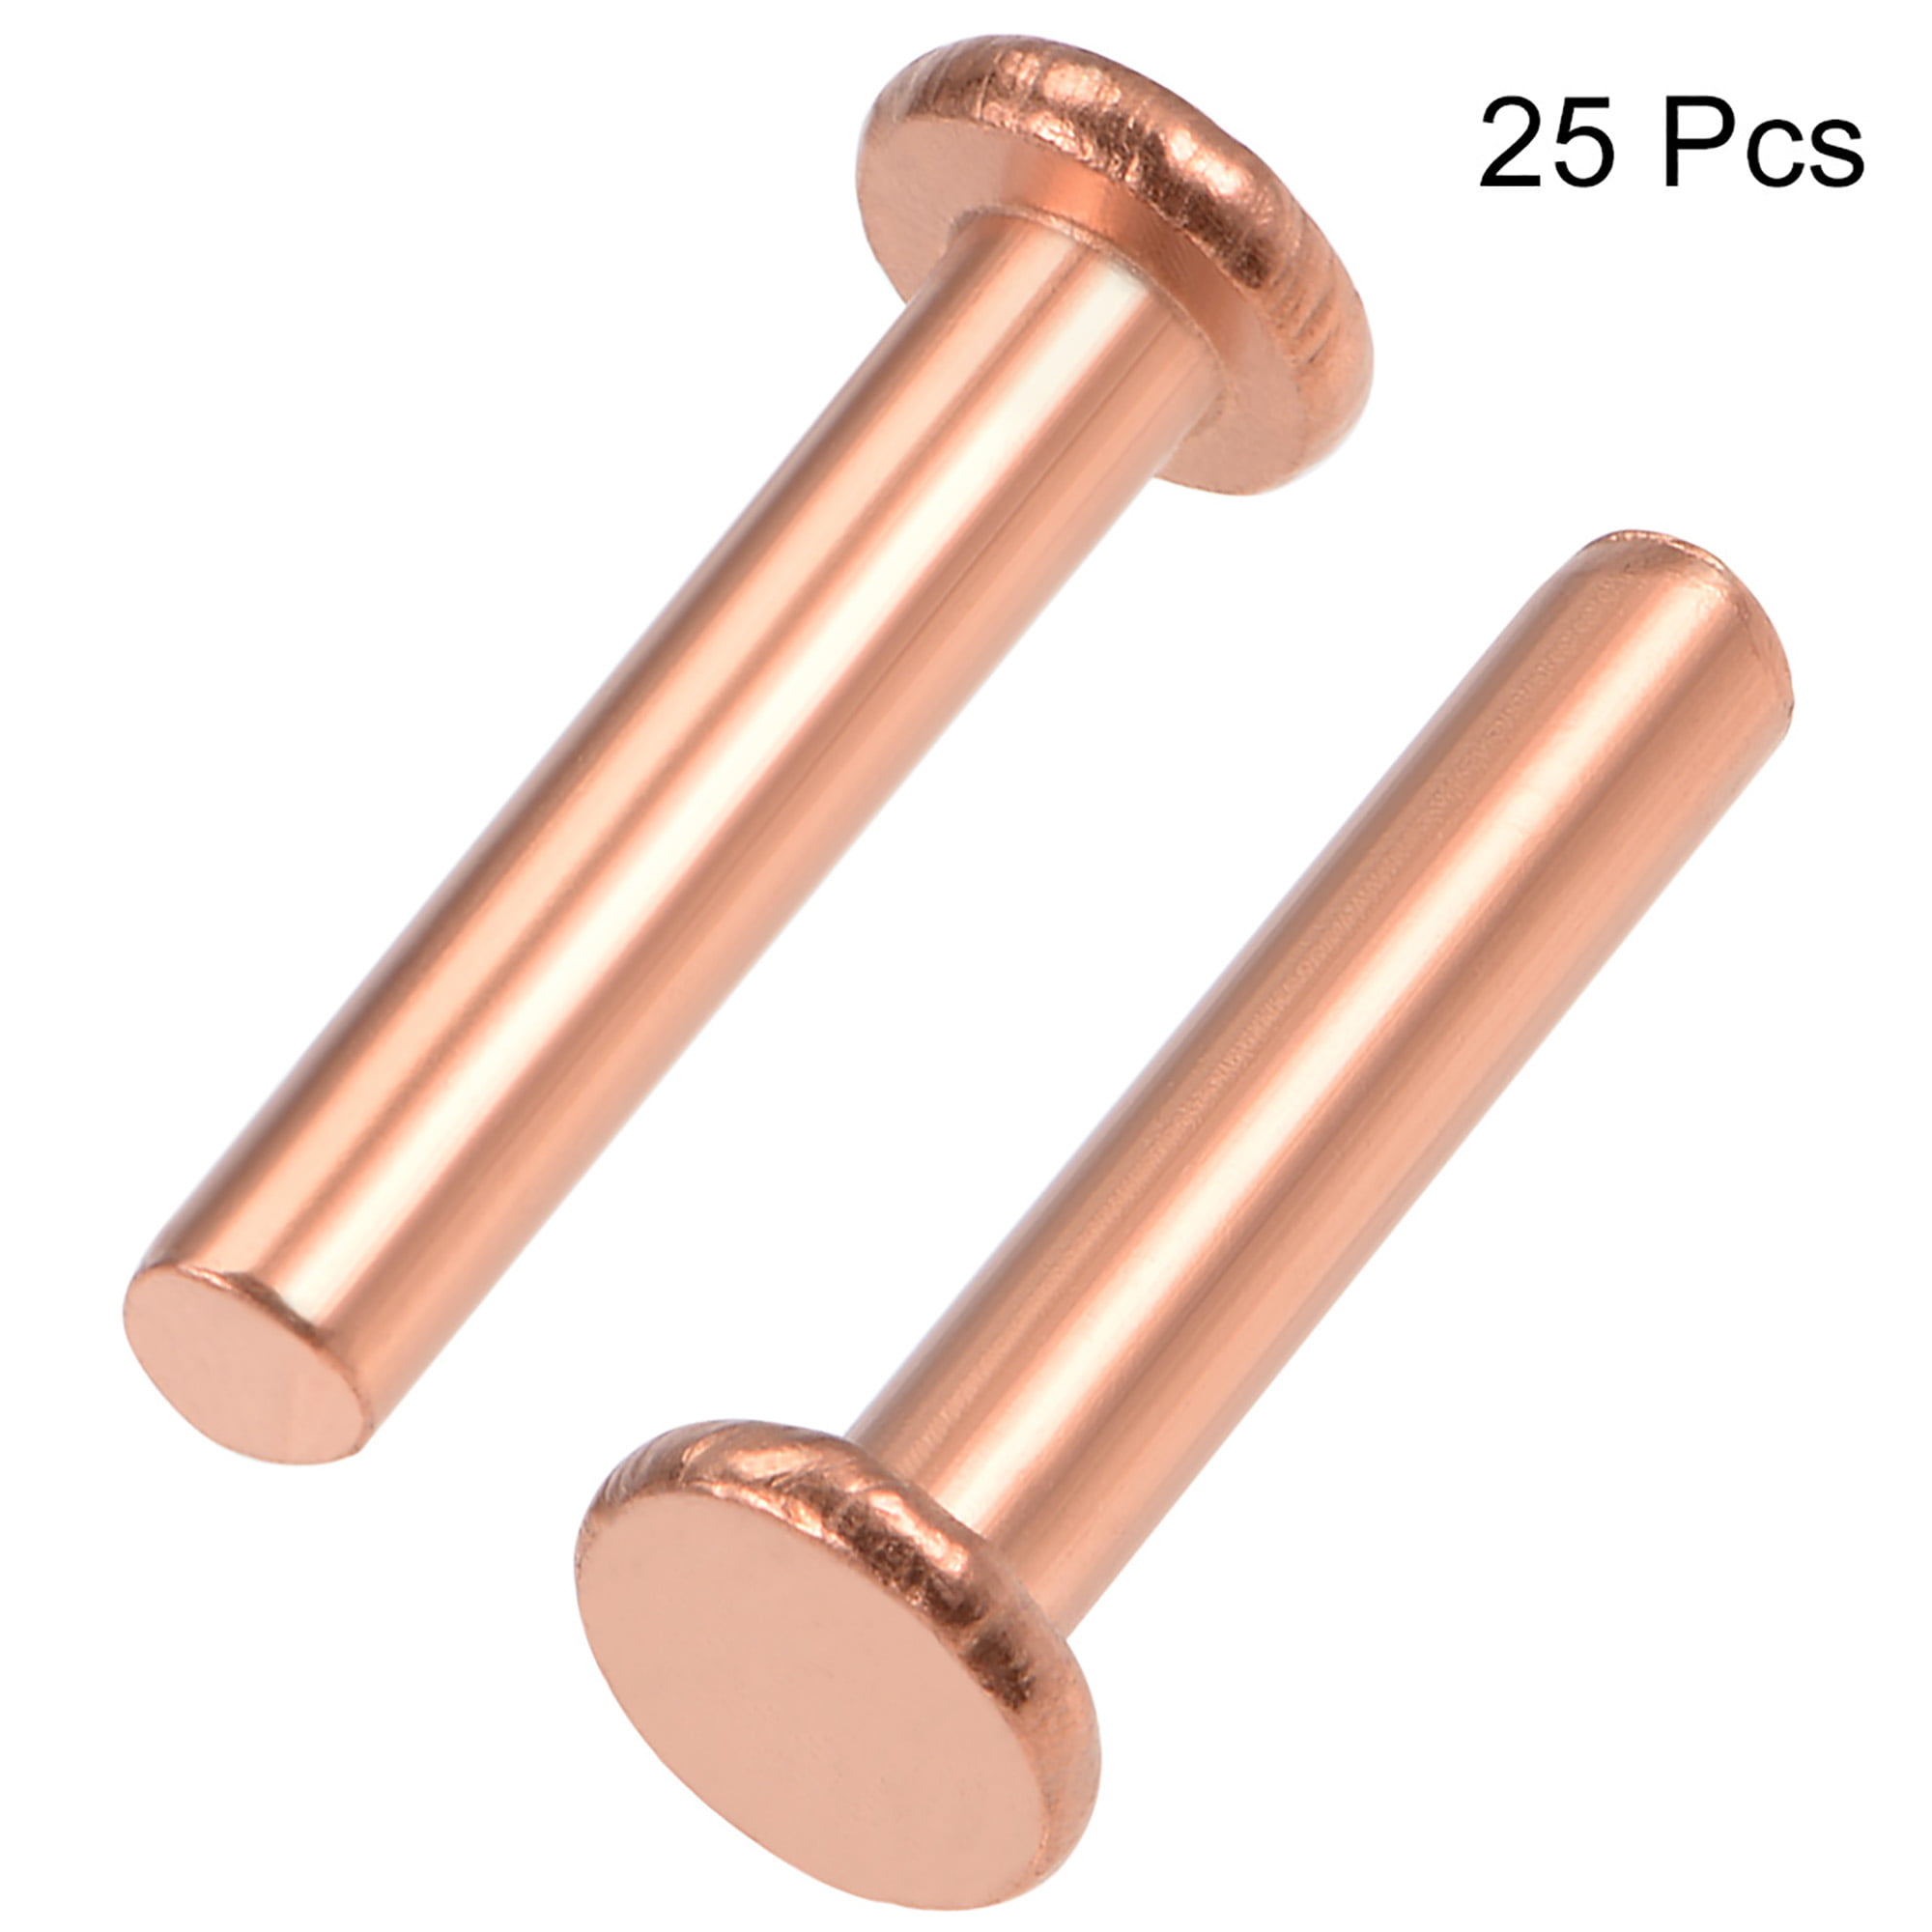 25 Pieces 5/32x 25/32 Flat Head Copper Solid Rivet Fasteners